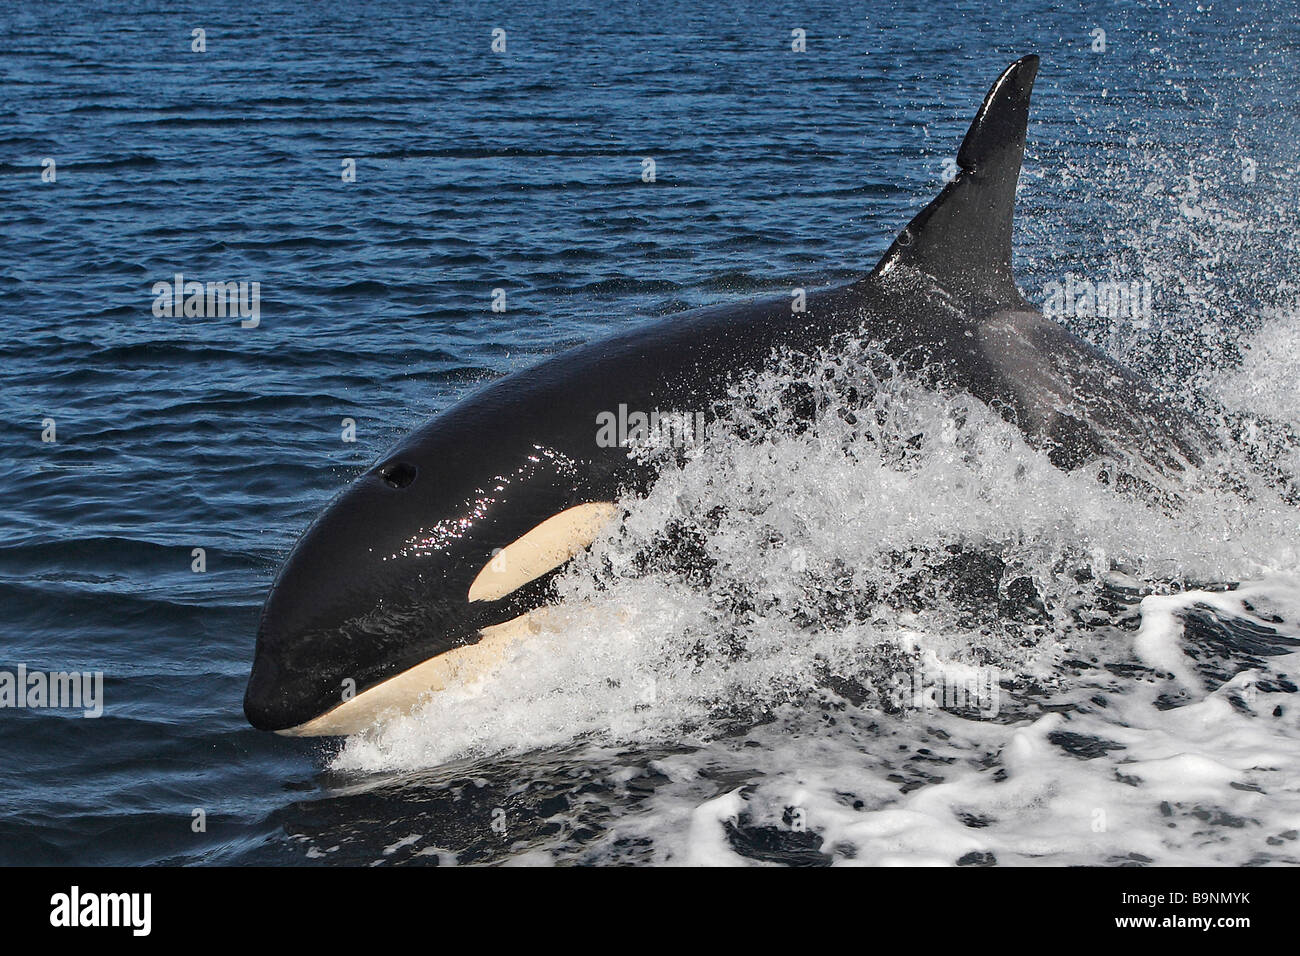 Orca Whale Killer Whale Orcinus orca Resident porpoising Stock Photo